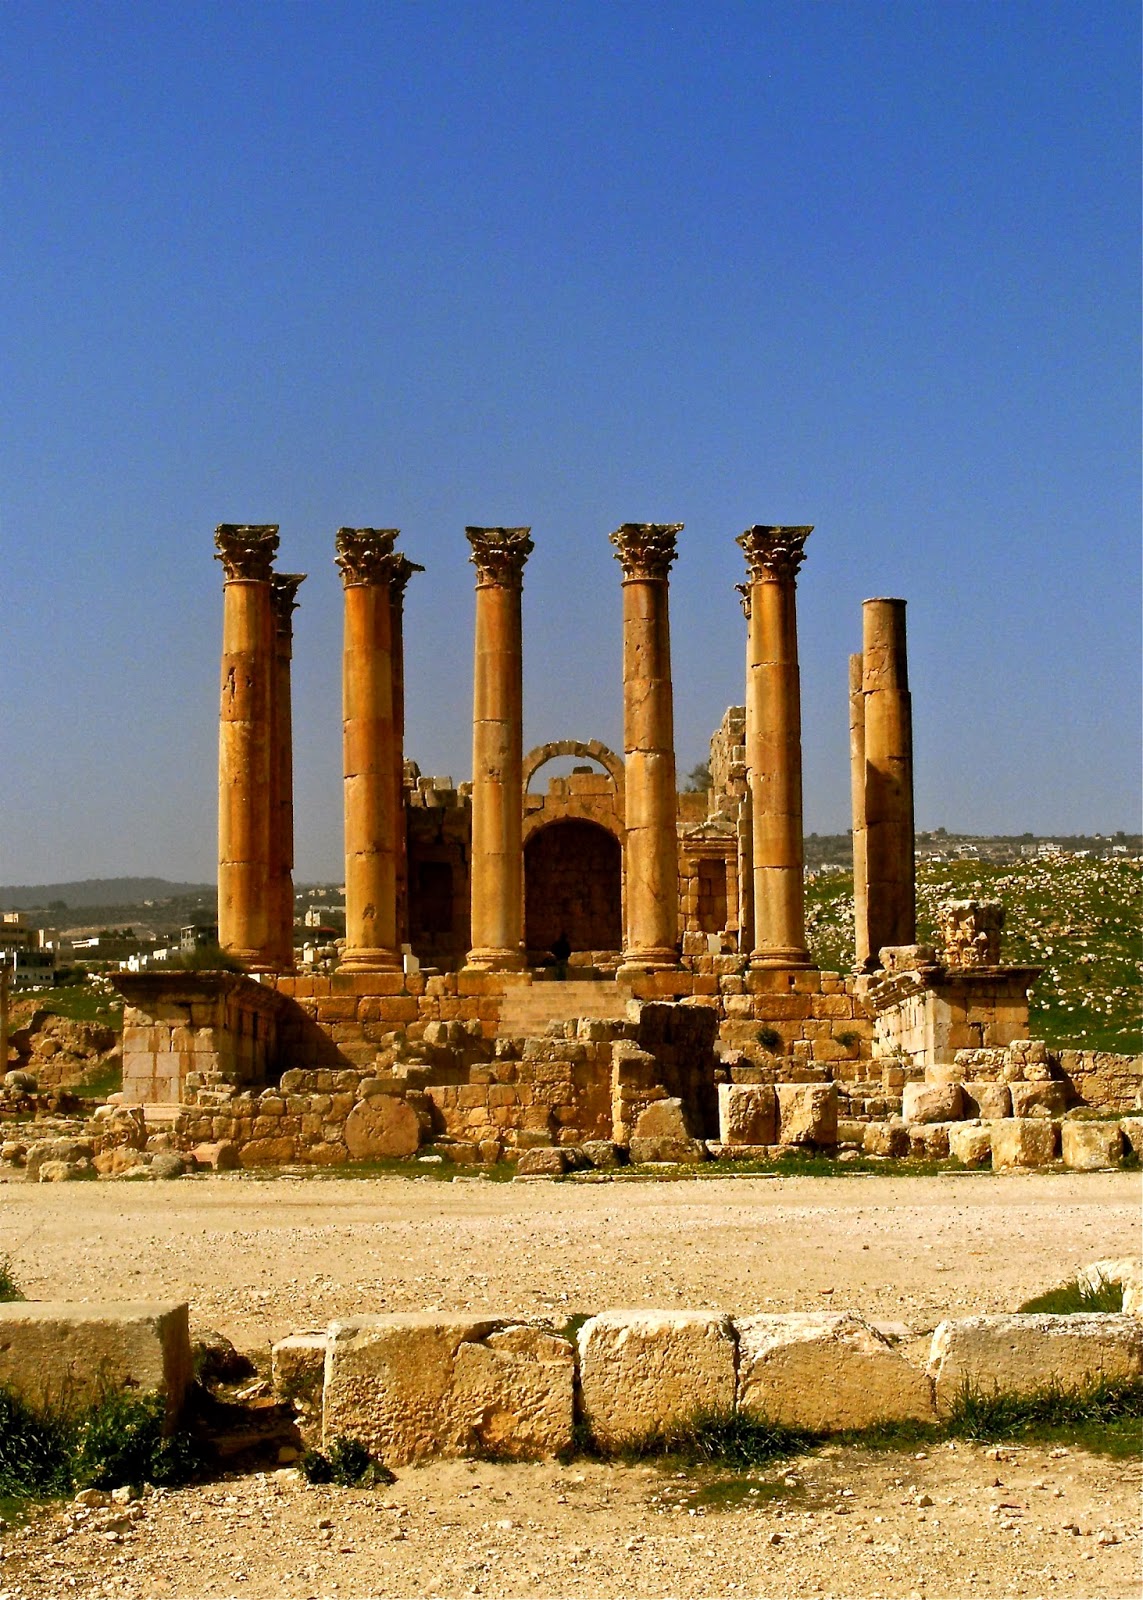 The temple of artemis